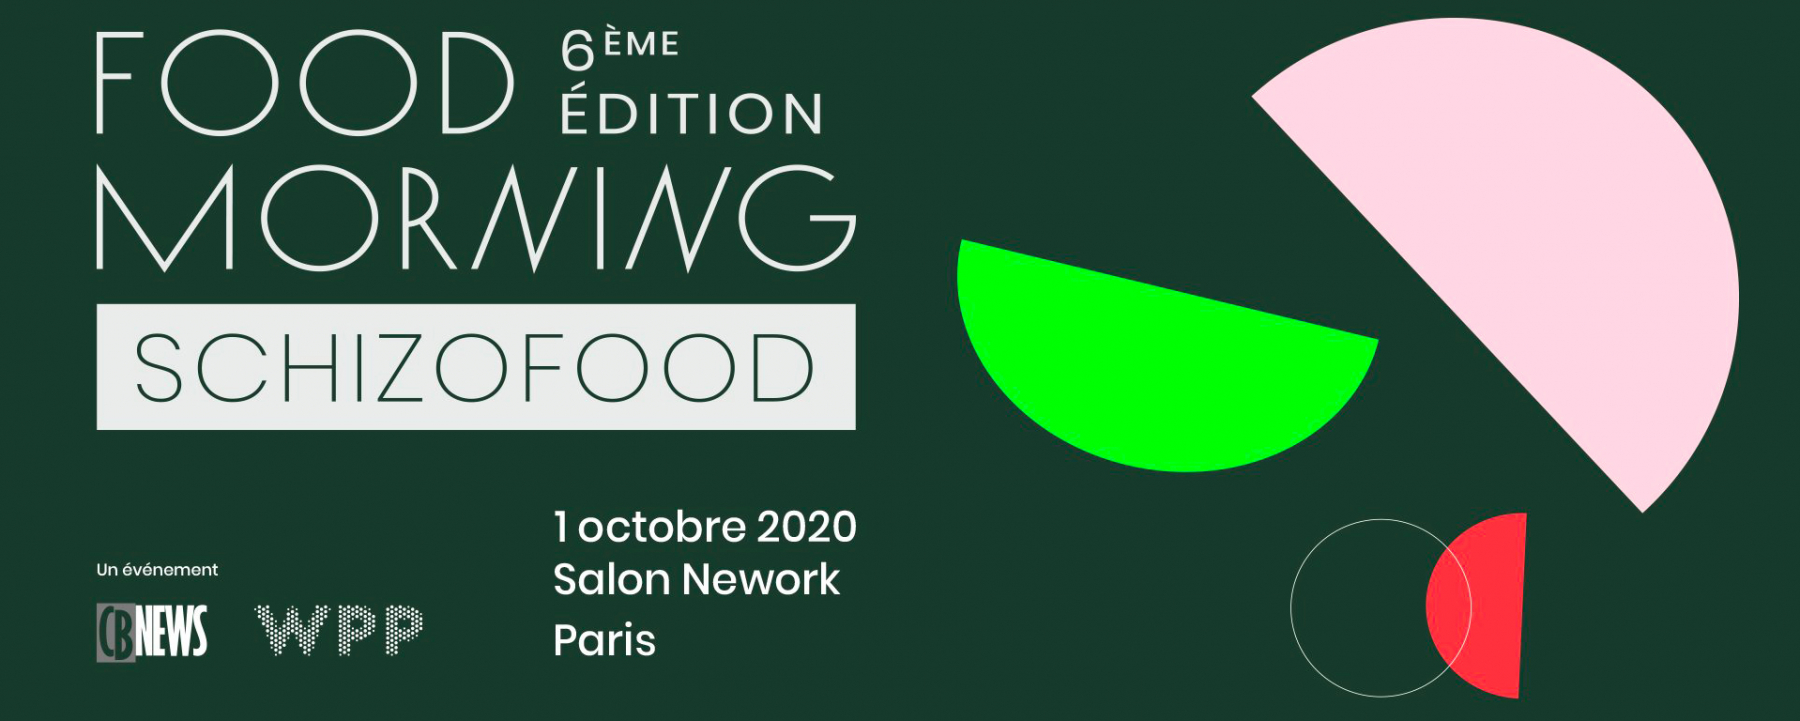 Food Morning 2020 CB News - 6eme édition organisé le 1er octobre 2020